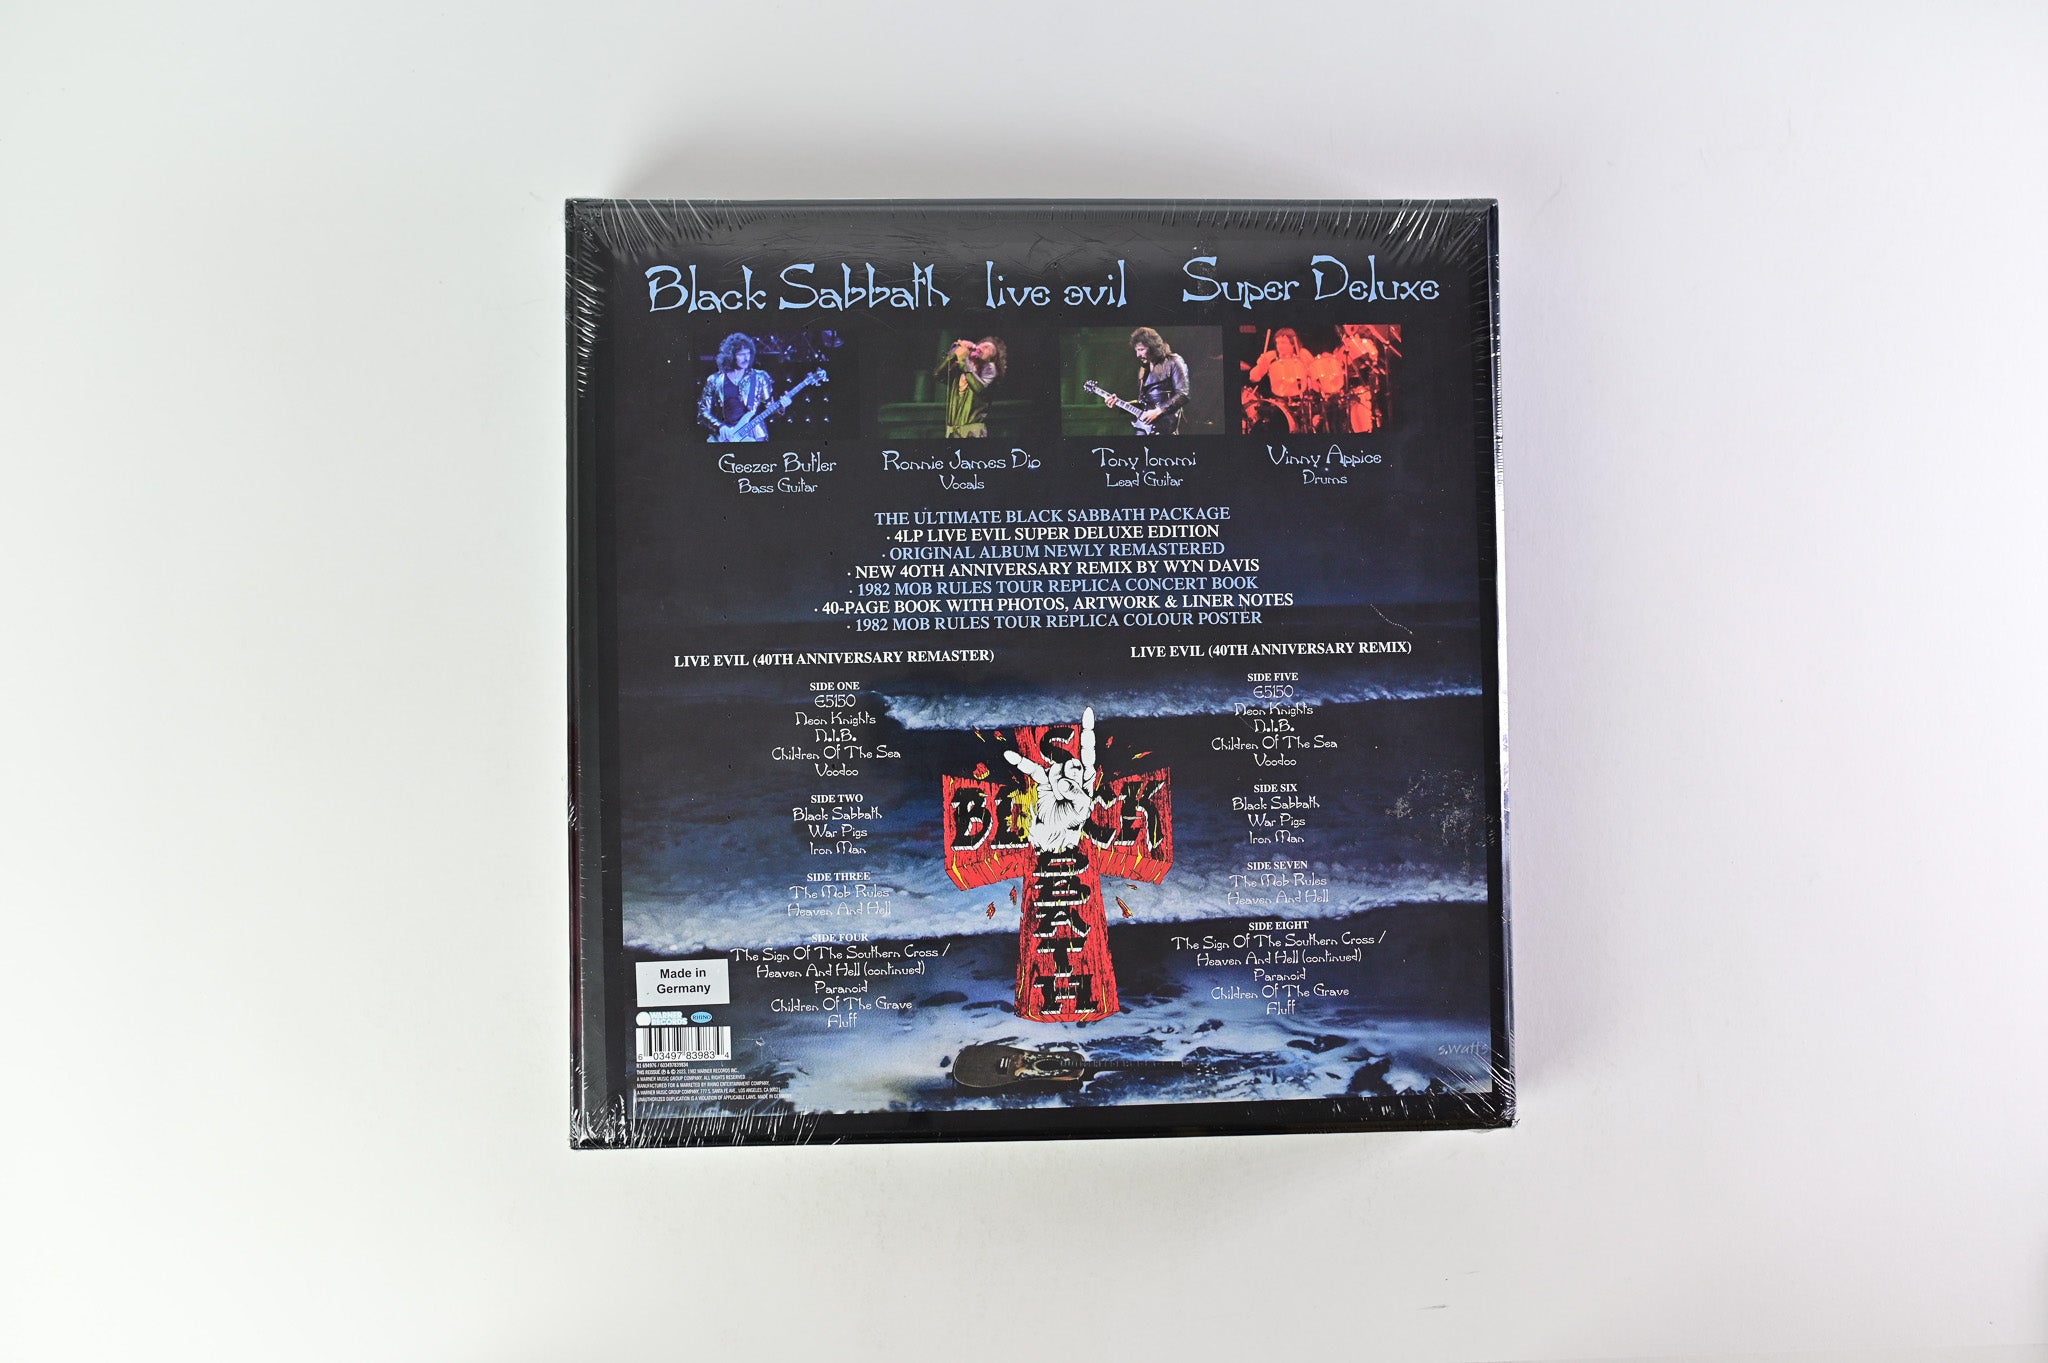 Black Sabbath - Live Evil Super Deluxe on Warner Rhino Deluxe Edition Box Set Reissue Sealed